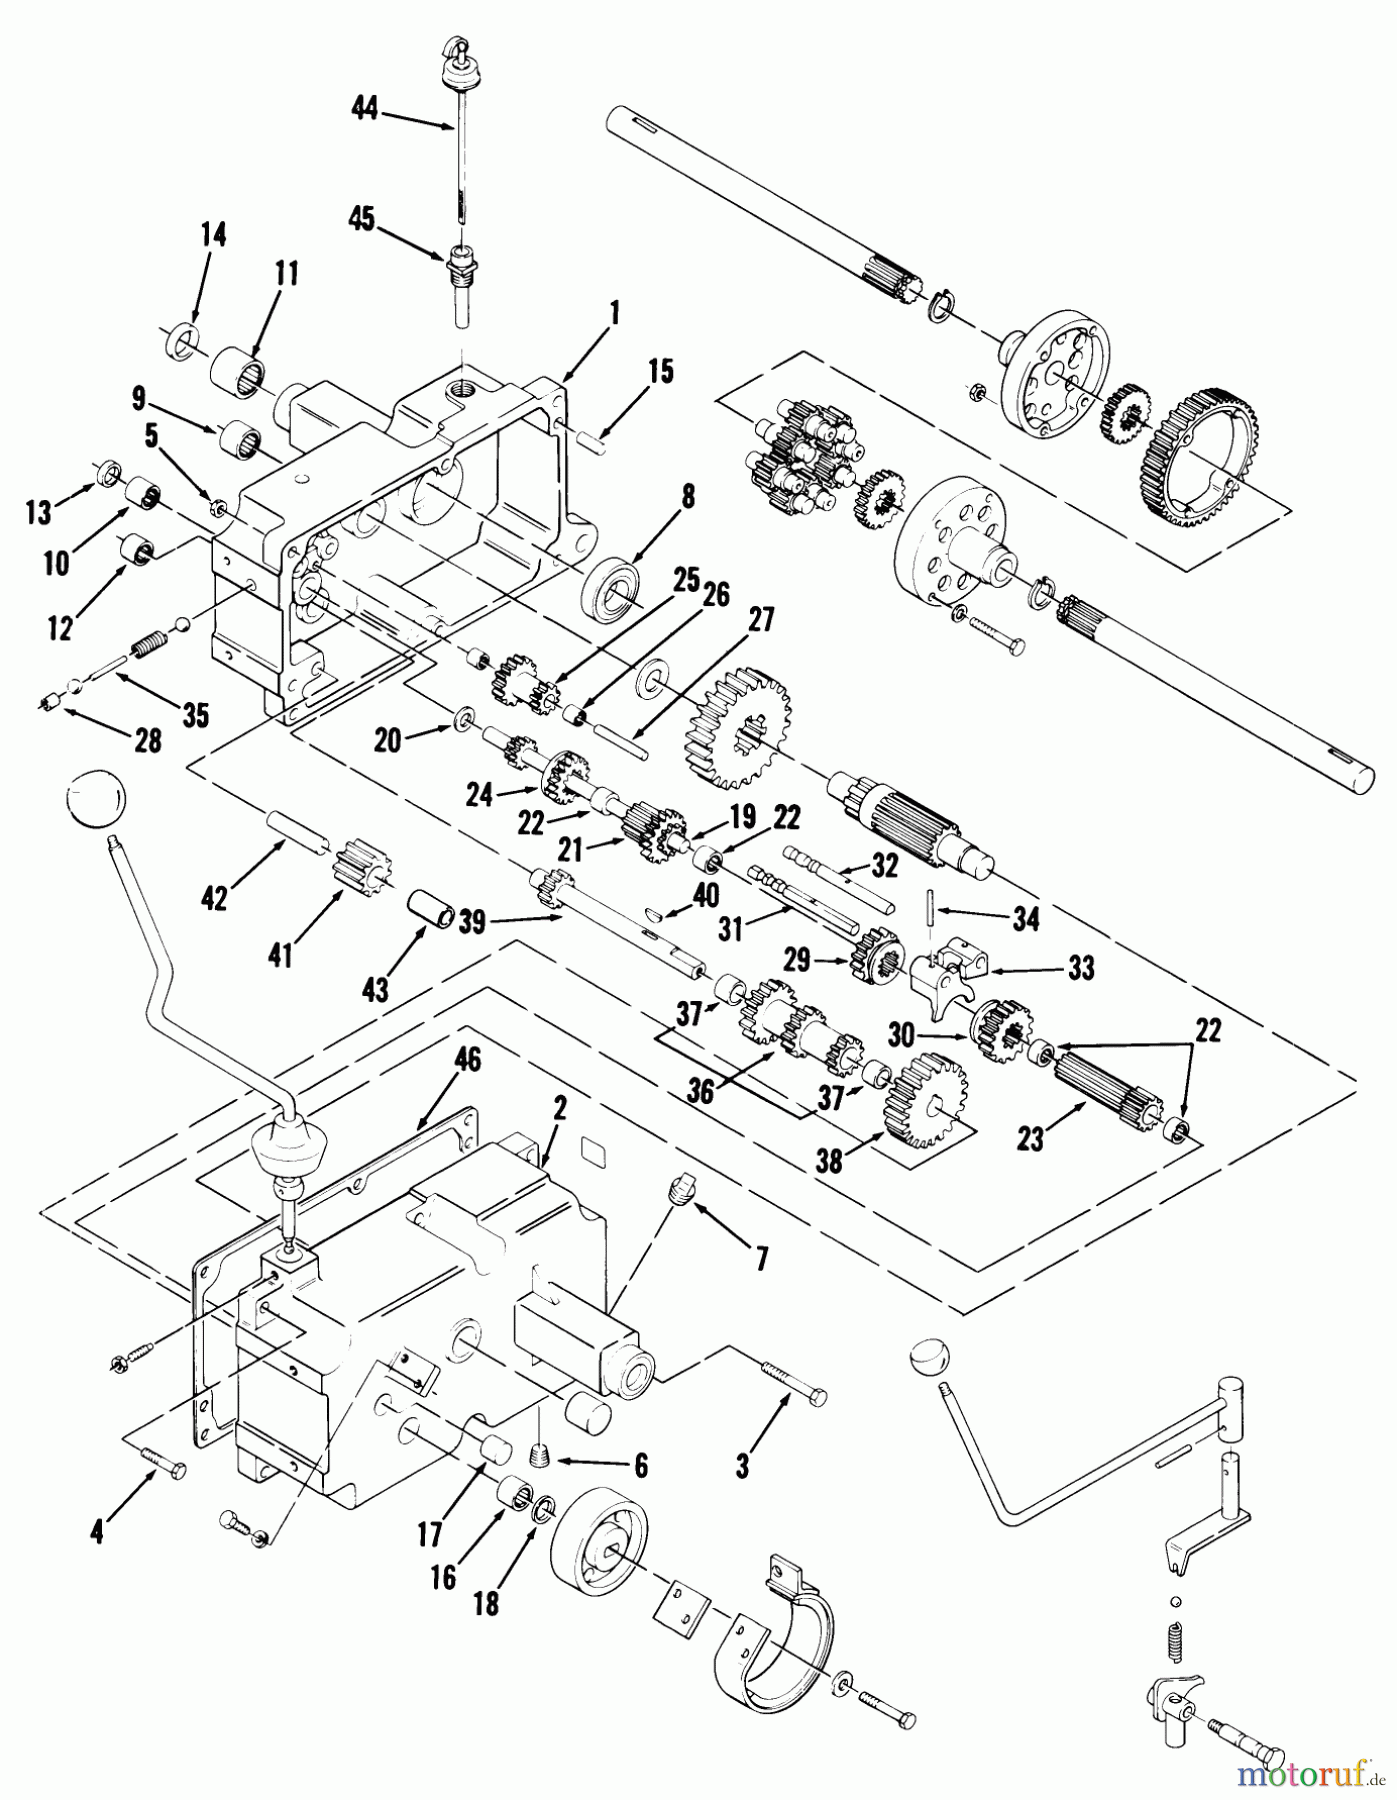  Toro Neu Mowers, Lawn & Garden Tractor Seite 1 01-17K802 (C-175) - Toro C-175 Twin 8-Speed Tractor, 1981 MECHANICAL TRANSMISSION-8 SPEED #1